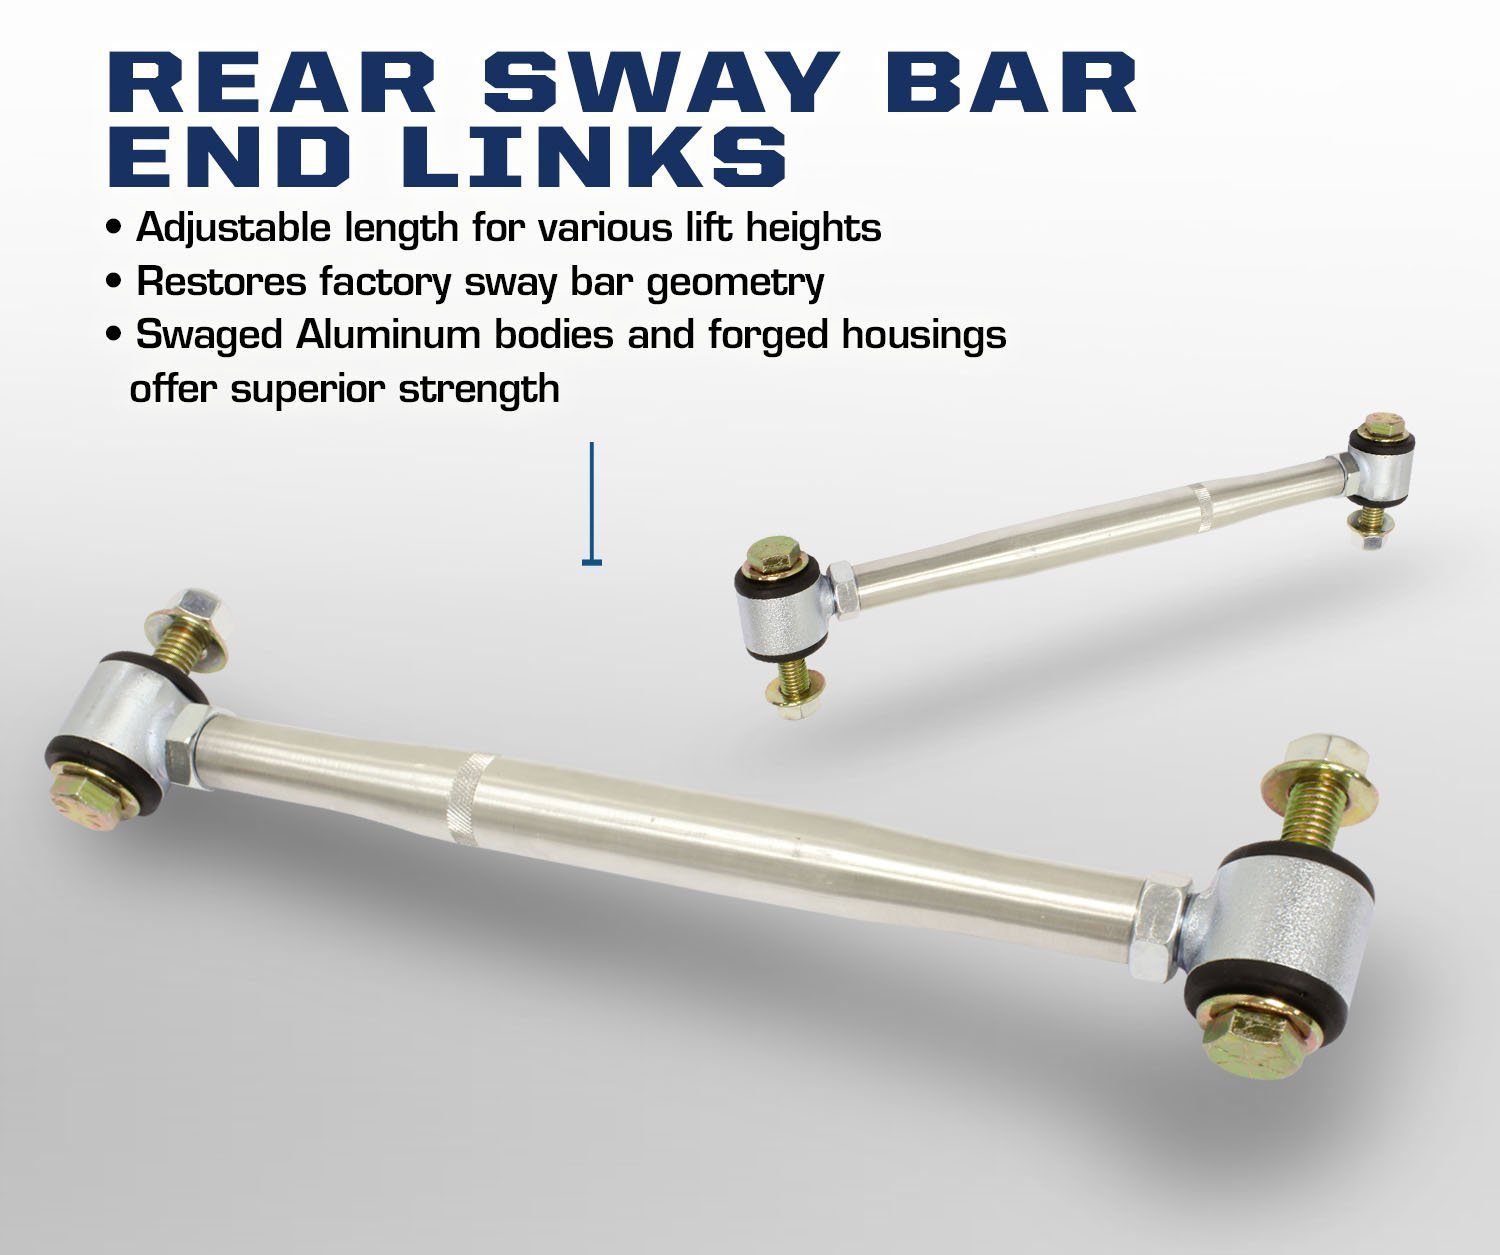 '09-18 Ram 1500 Rear Extended Sway Bar End Links Suspension Carli Suspension description